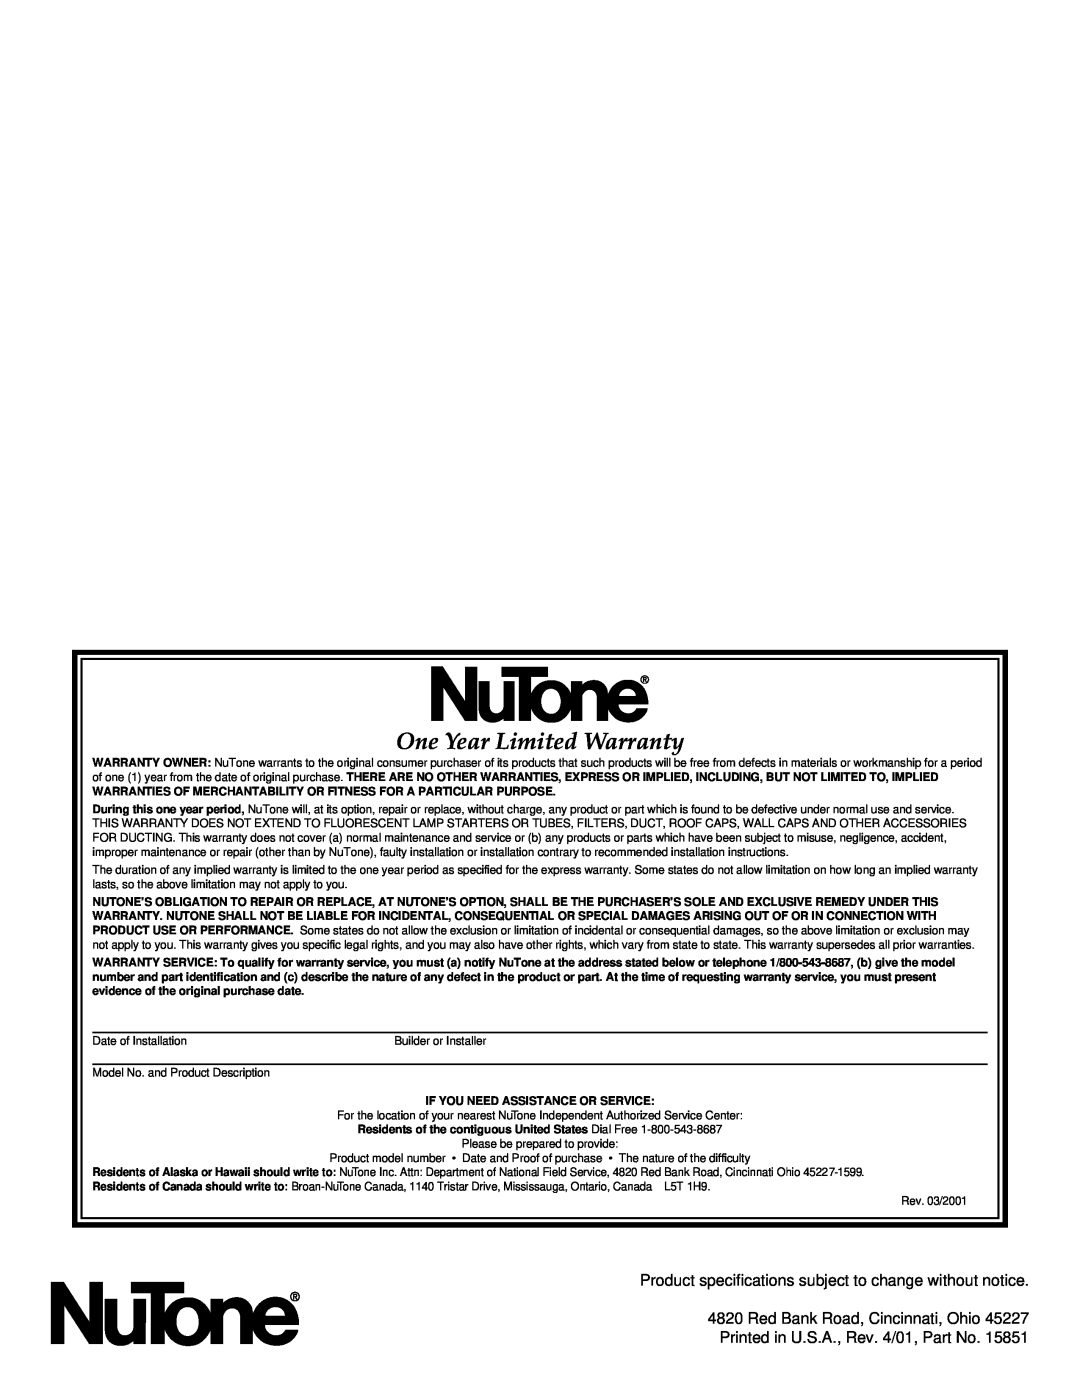 NuTone 8310 installation instructions One Year Limited Warranty, Red Bank Road, Cincinnati, Ohio 